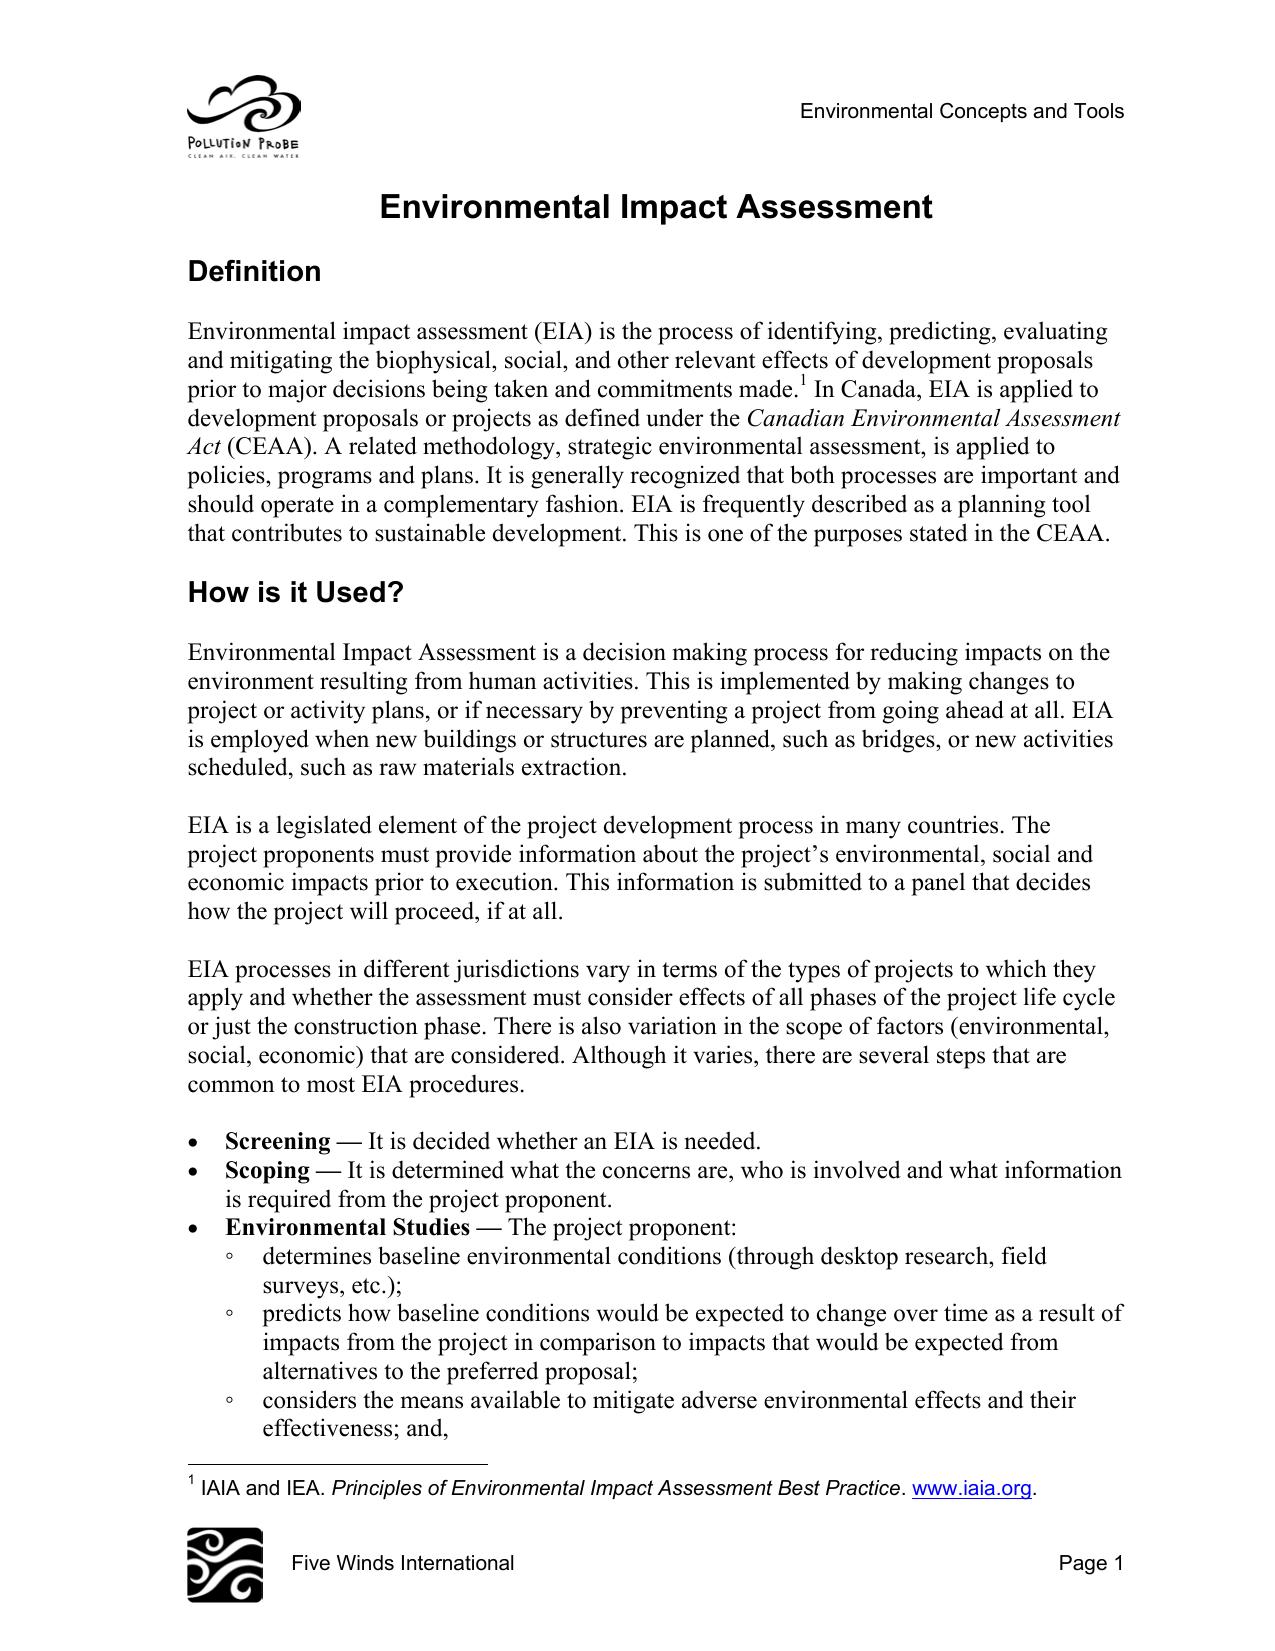 Microsoft Word - Environmental Impact Assessment 040127.doc